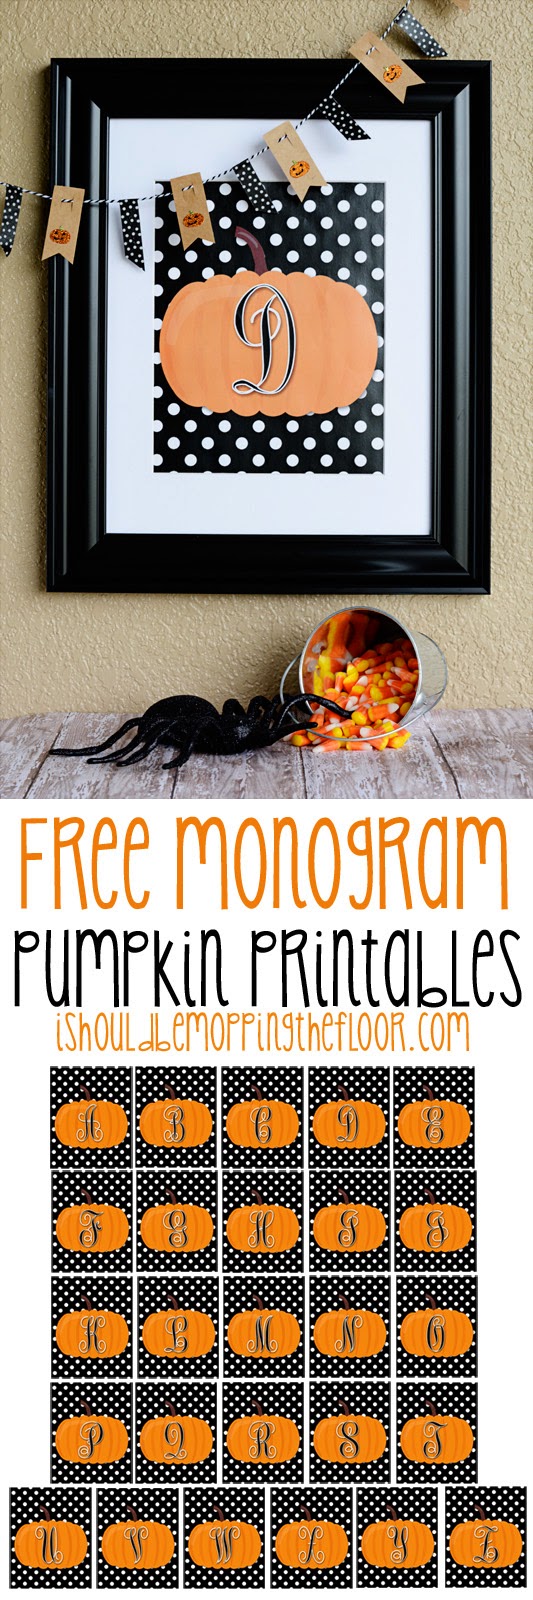 Free Monogram Pumpkin Printables | A-Z Available | 8x10 | Instant Downloads